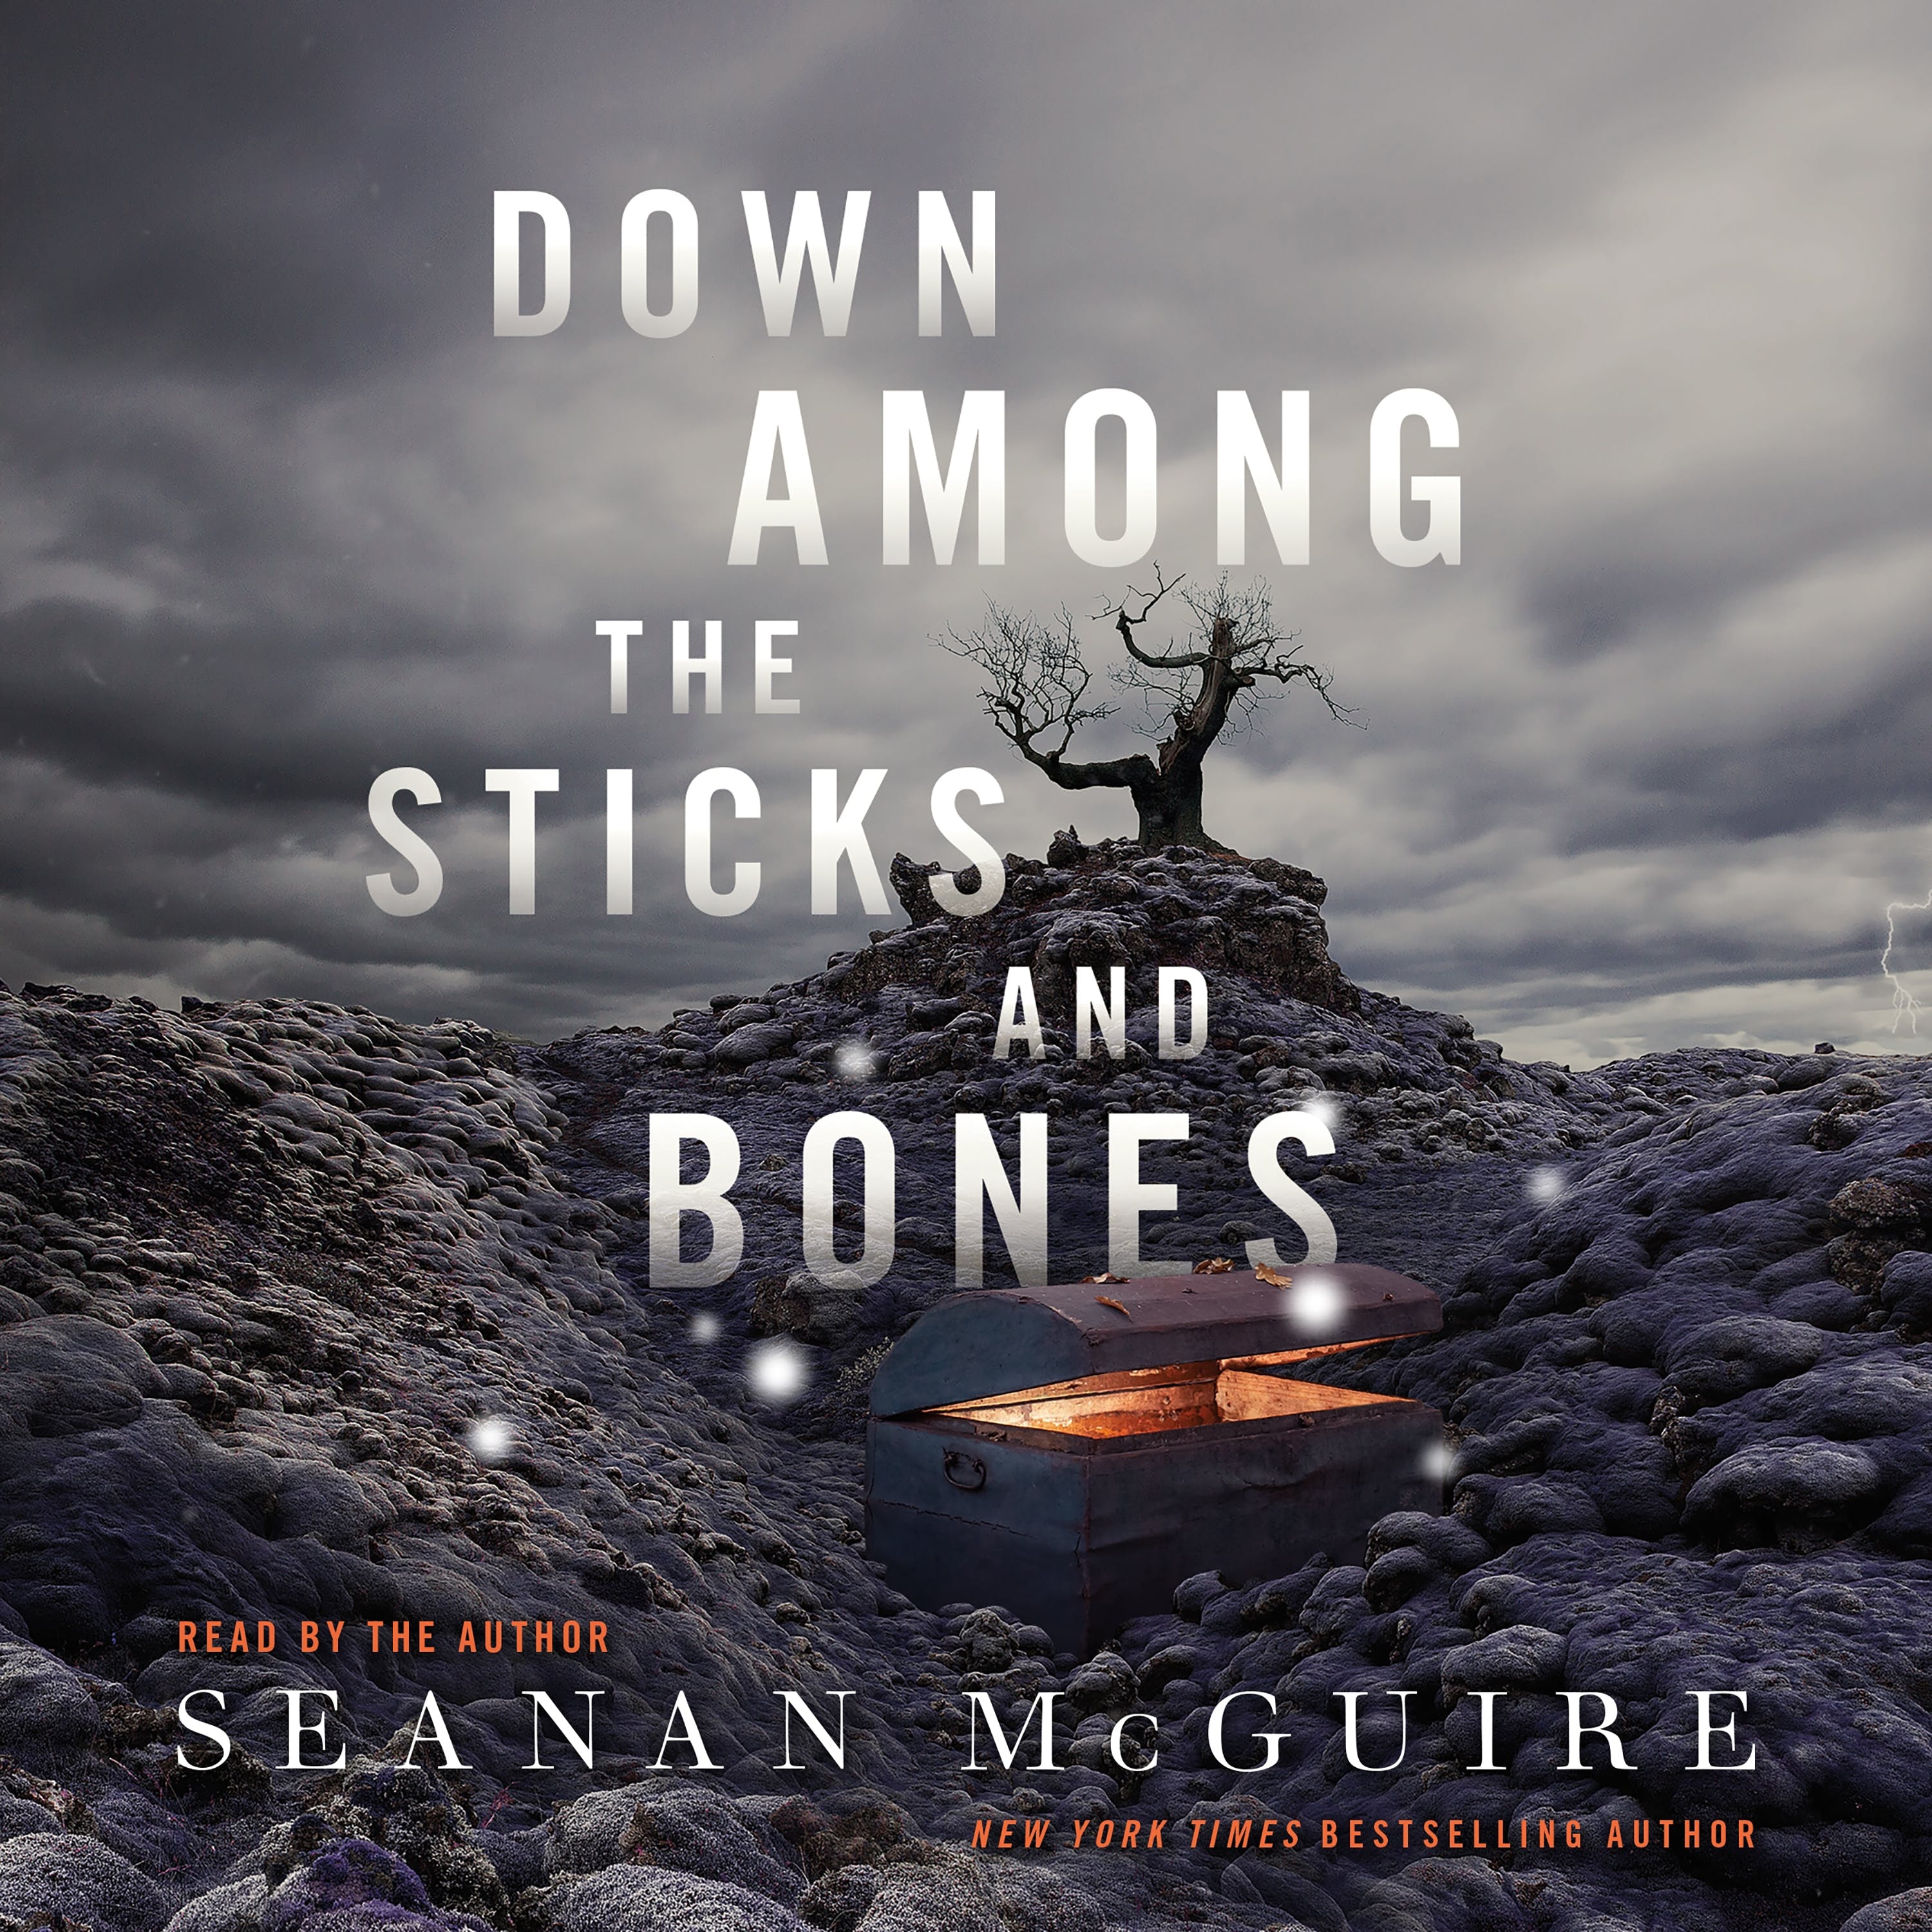 Down among the sticks and bones (AudiobookFormat)